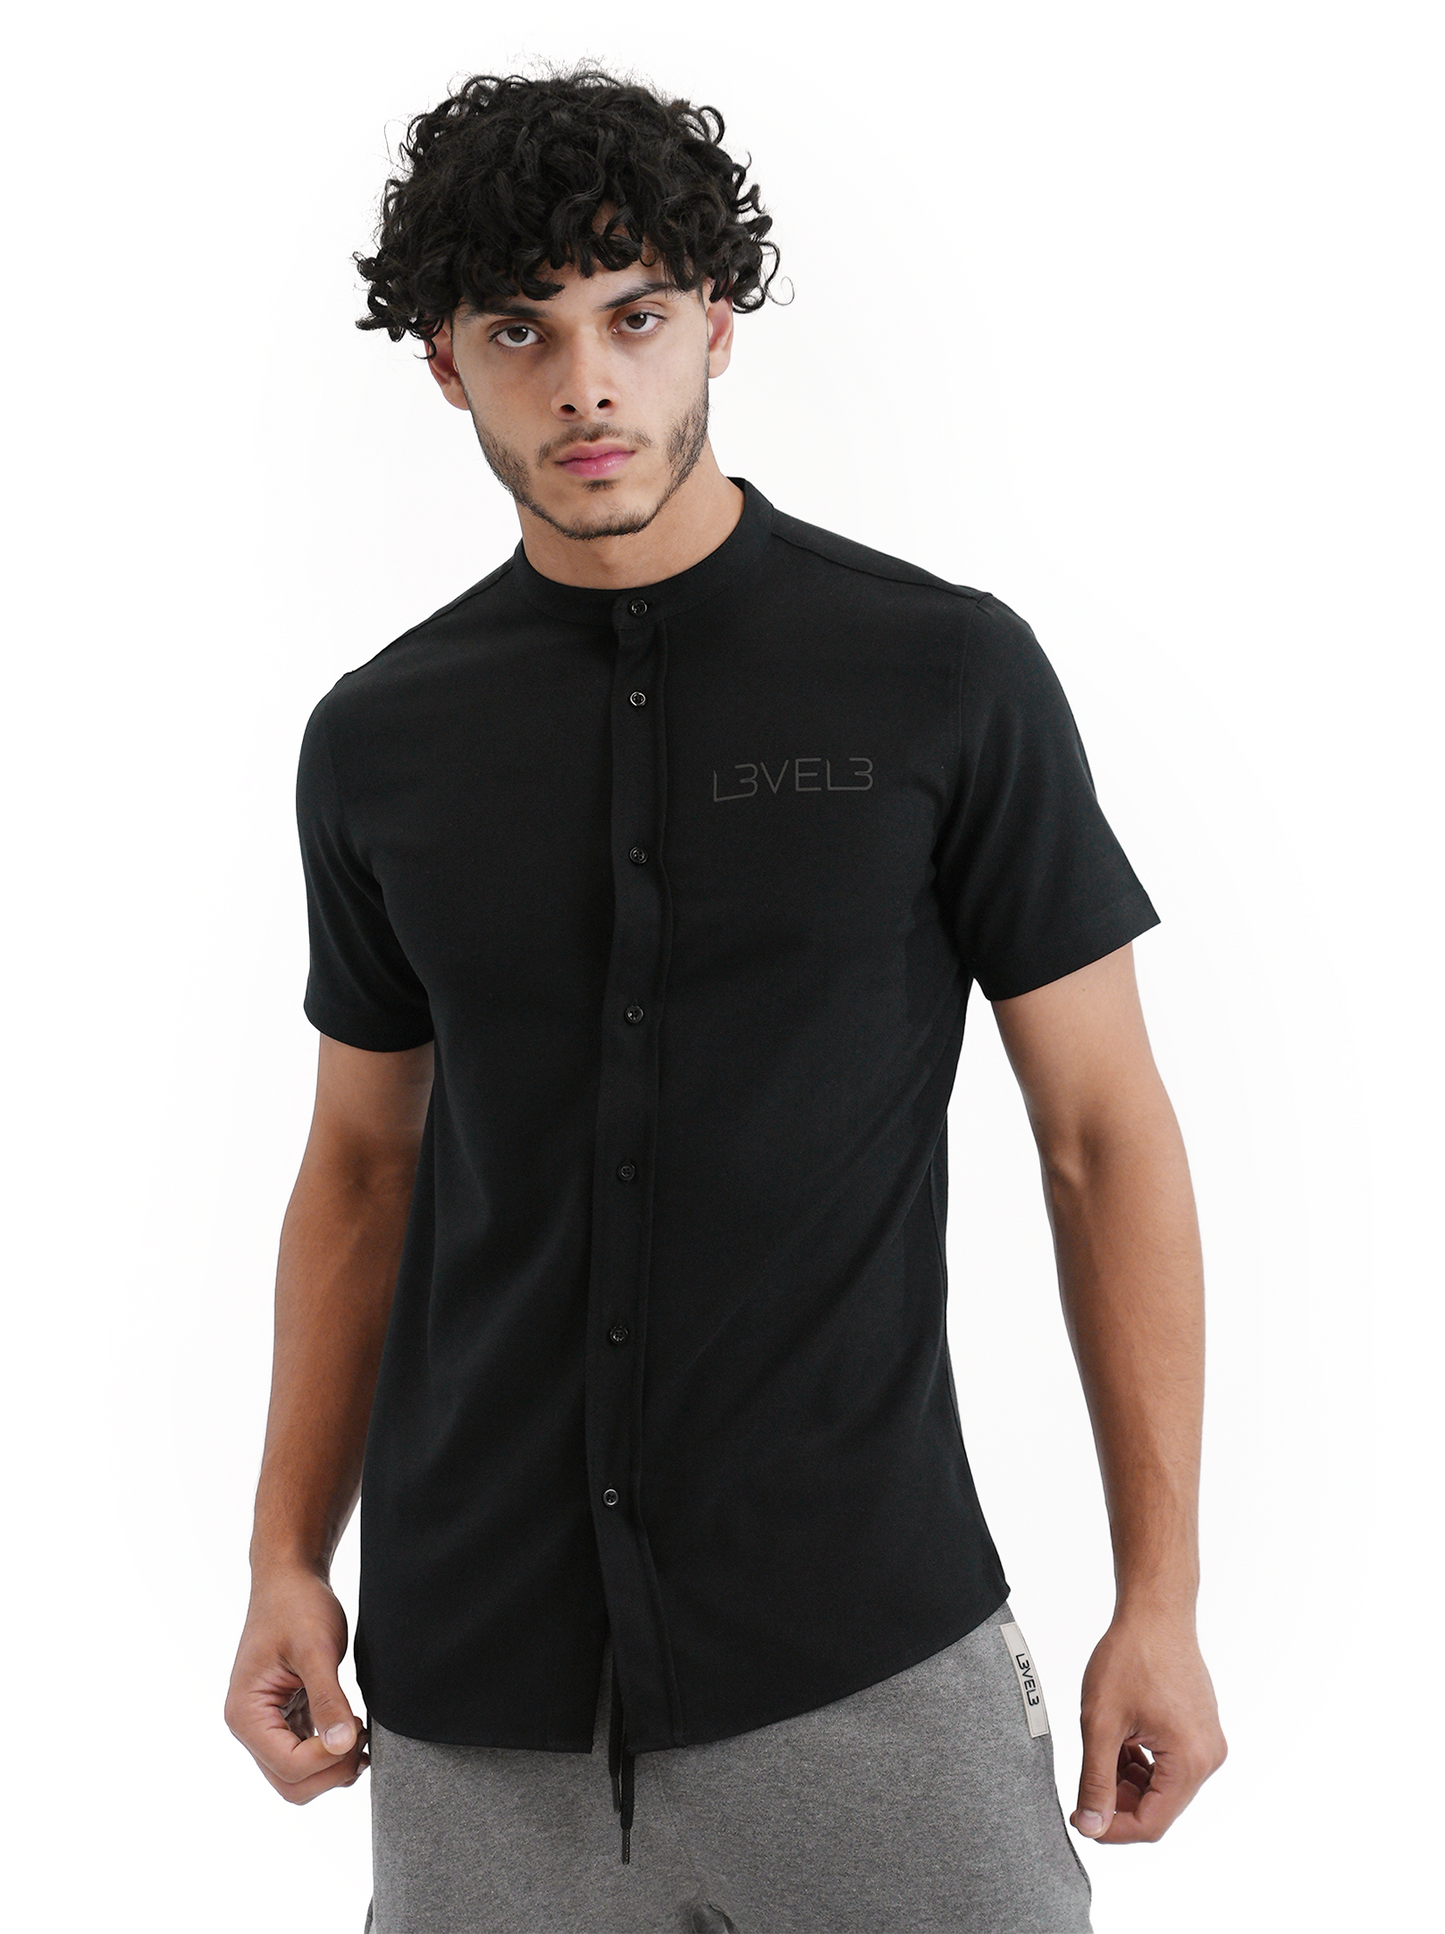 L3VEL3™ Short Sleeve Dress Shirt